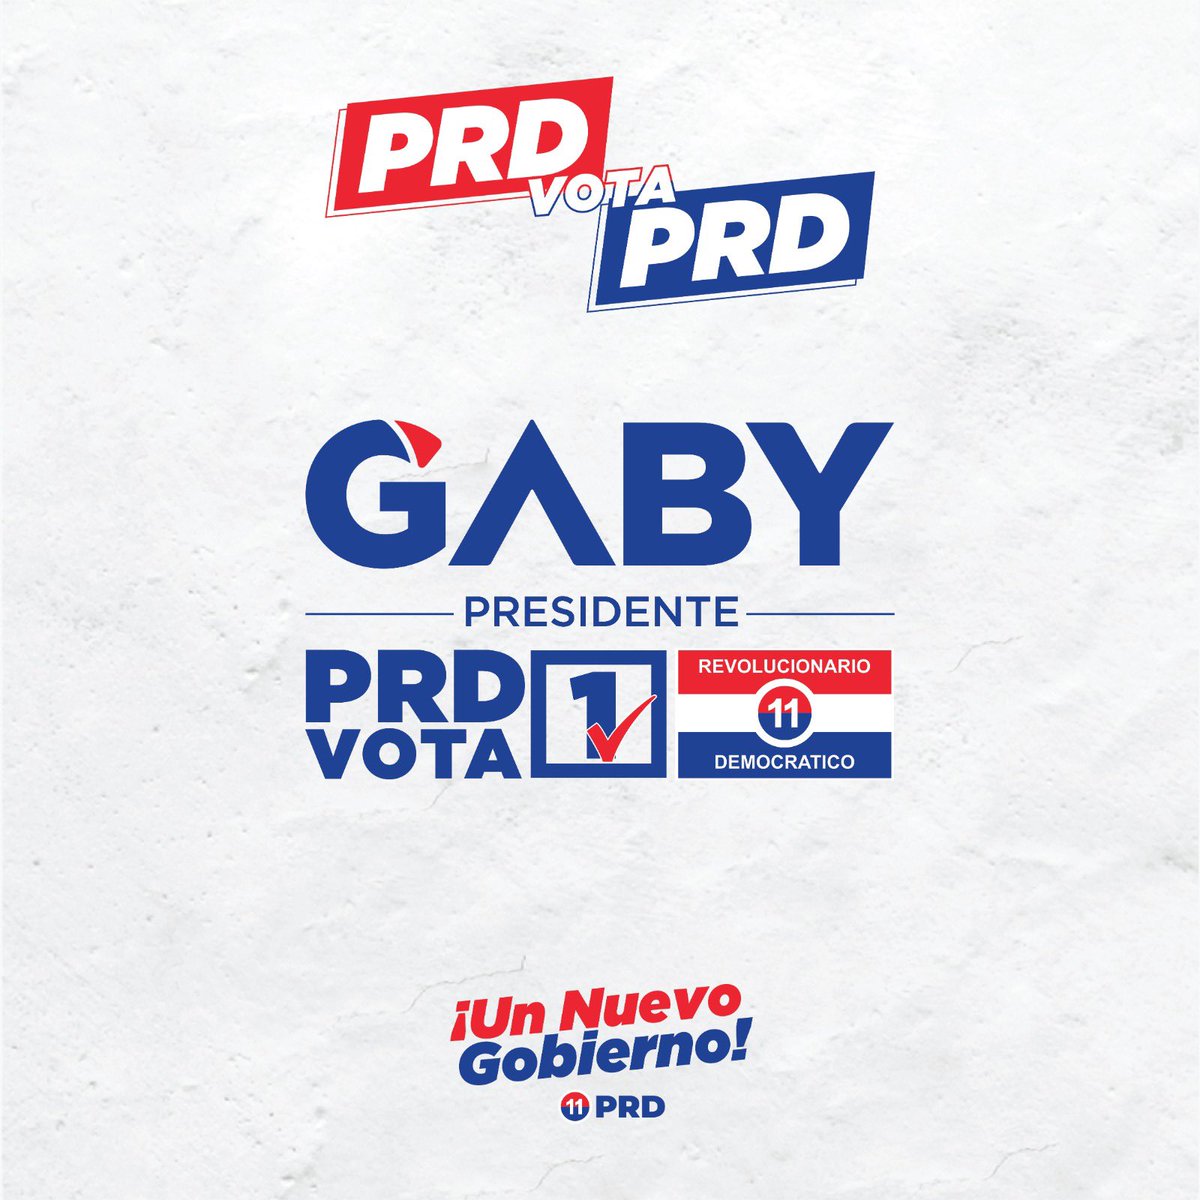 Bocas del Toro, estos son tus candidatos a Alcalde. PRD vota PRD #1 #UnNuevoGobiernoPRD